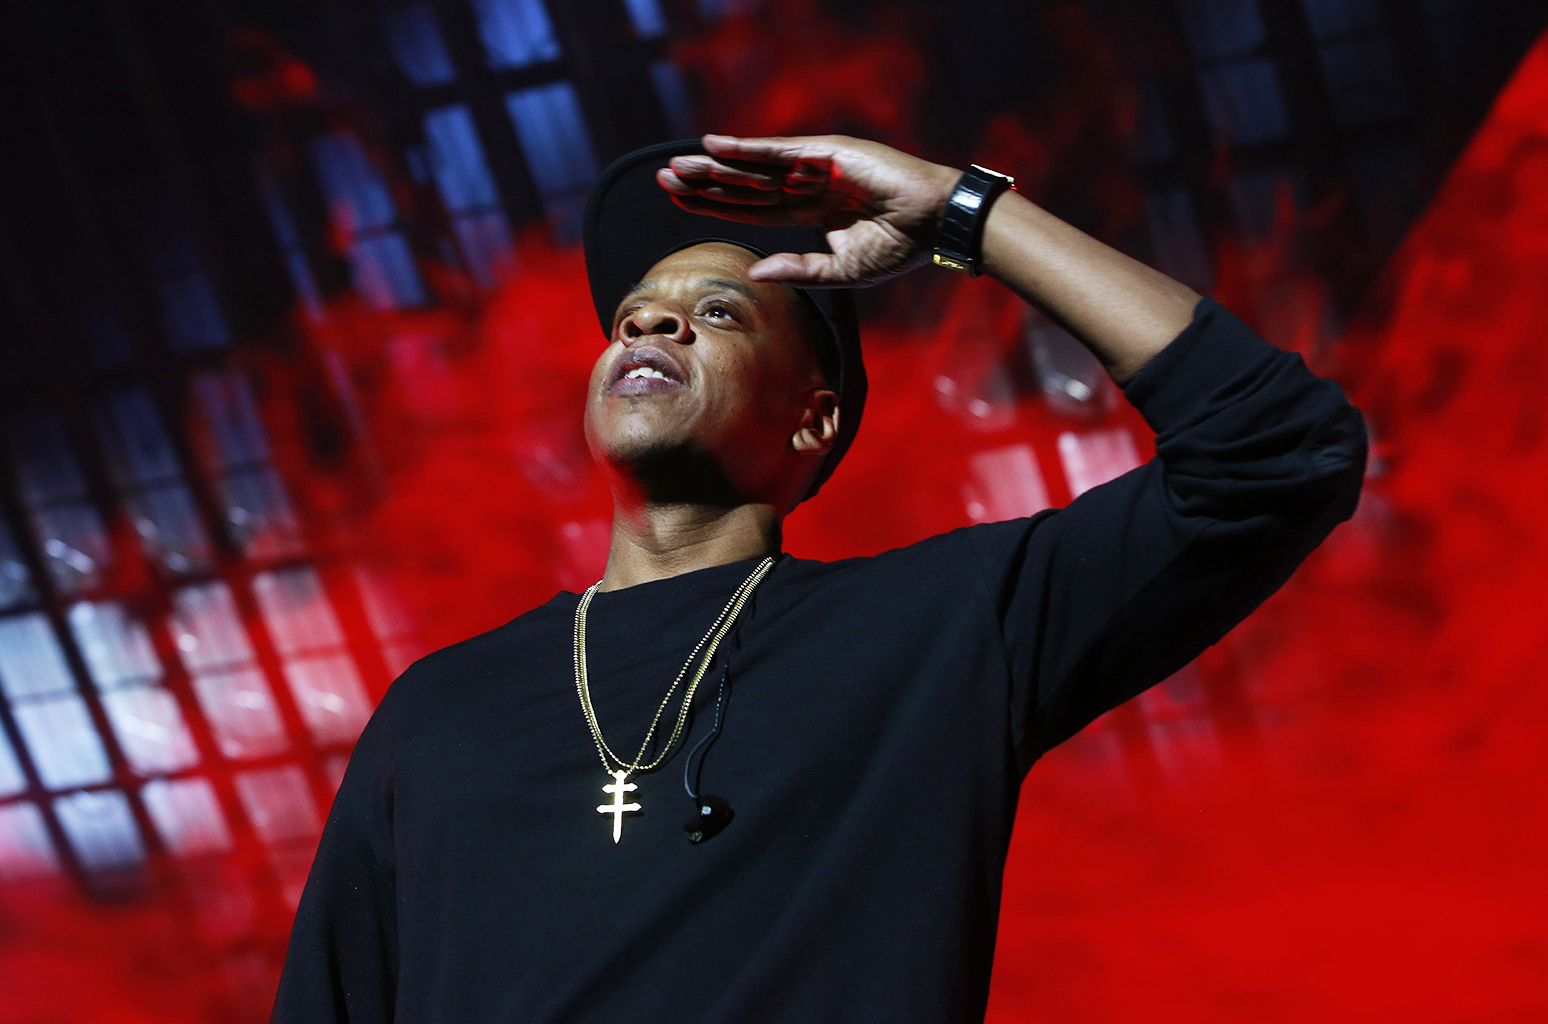 Jay Z le dedicó "Numb/Encore" al fallecido Chester Bennington. Cusica Plus.